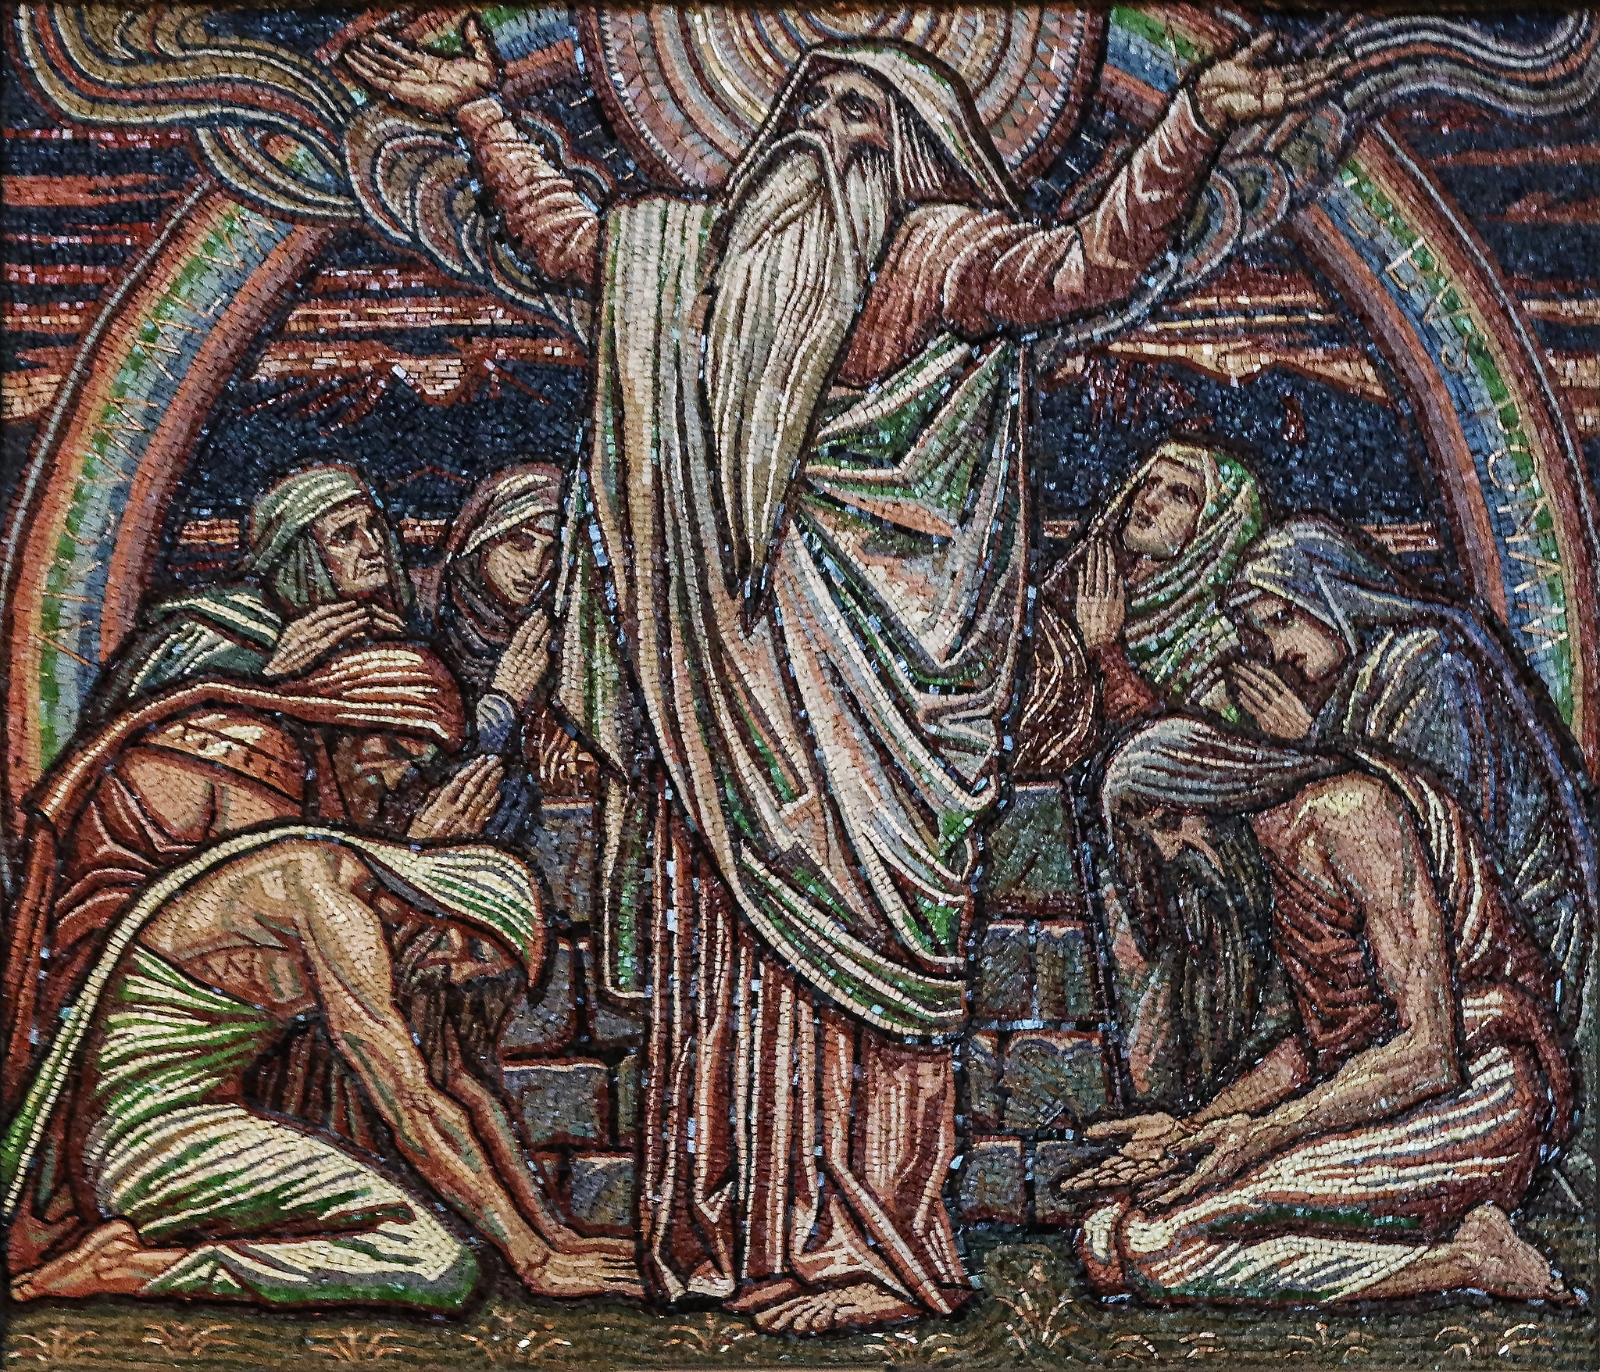 Mosaik aus der Kathedrale St. Paul in London, fotografiert von Lawrence OP. Lizenz: CC BY-NC-ND 2.0.